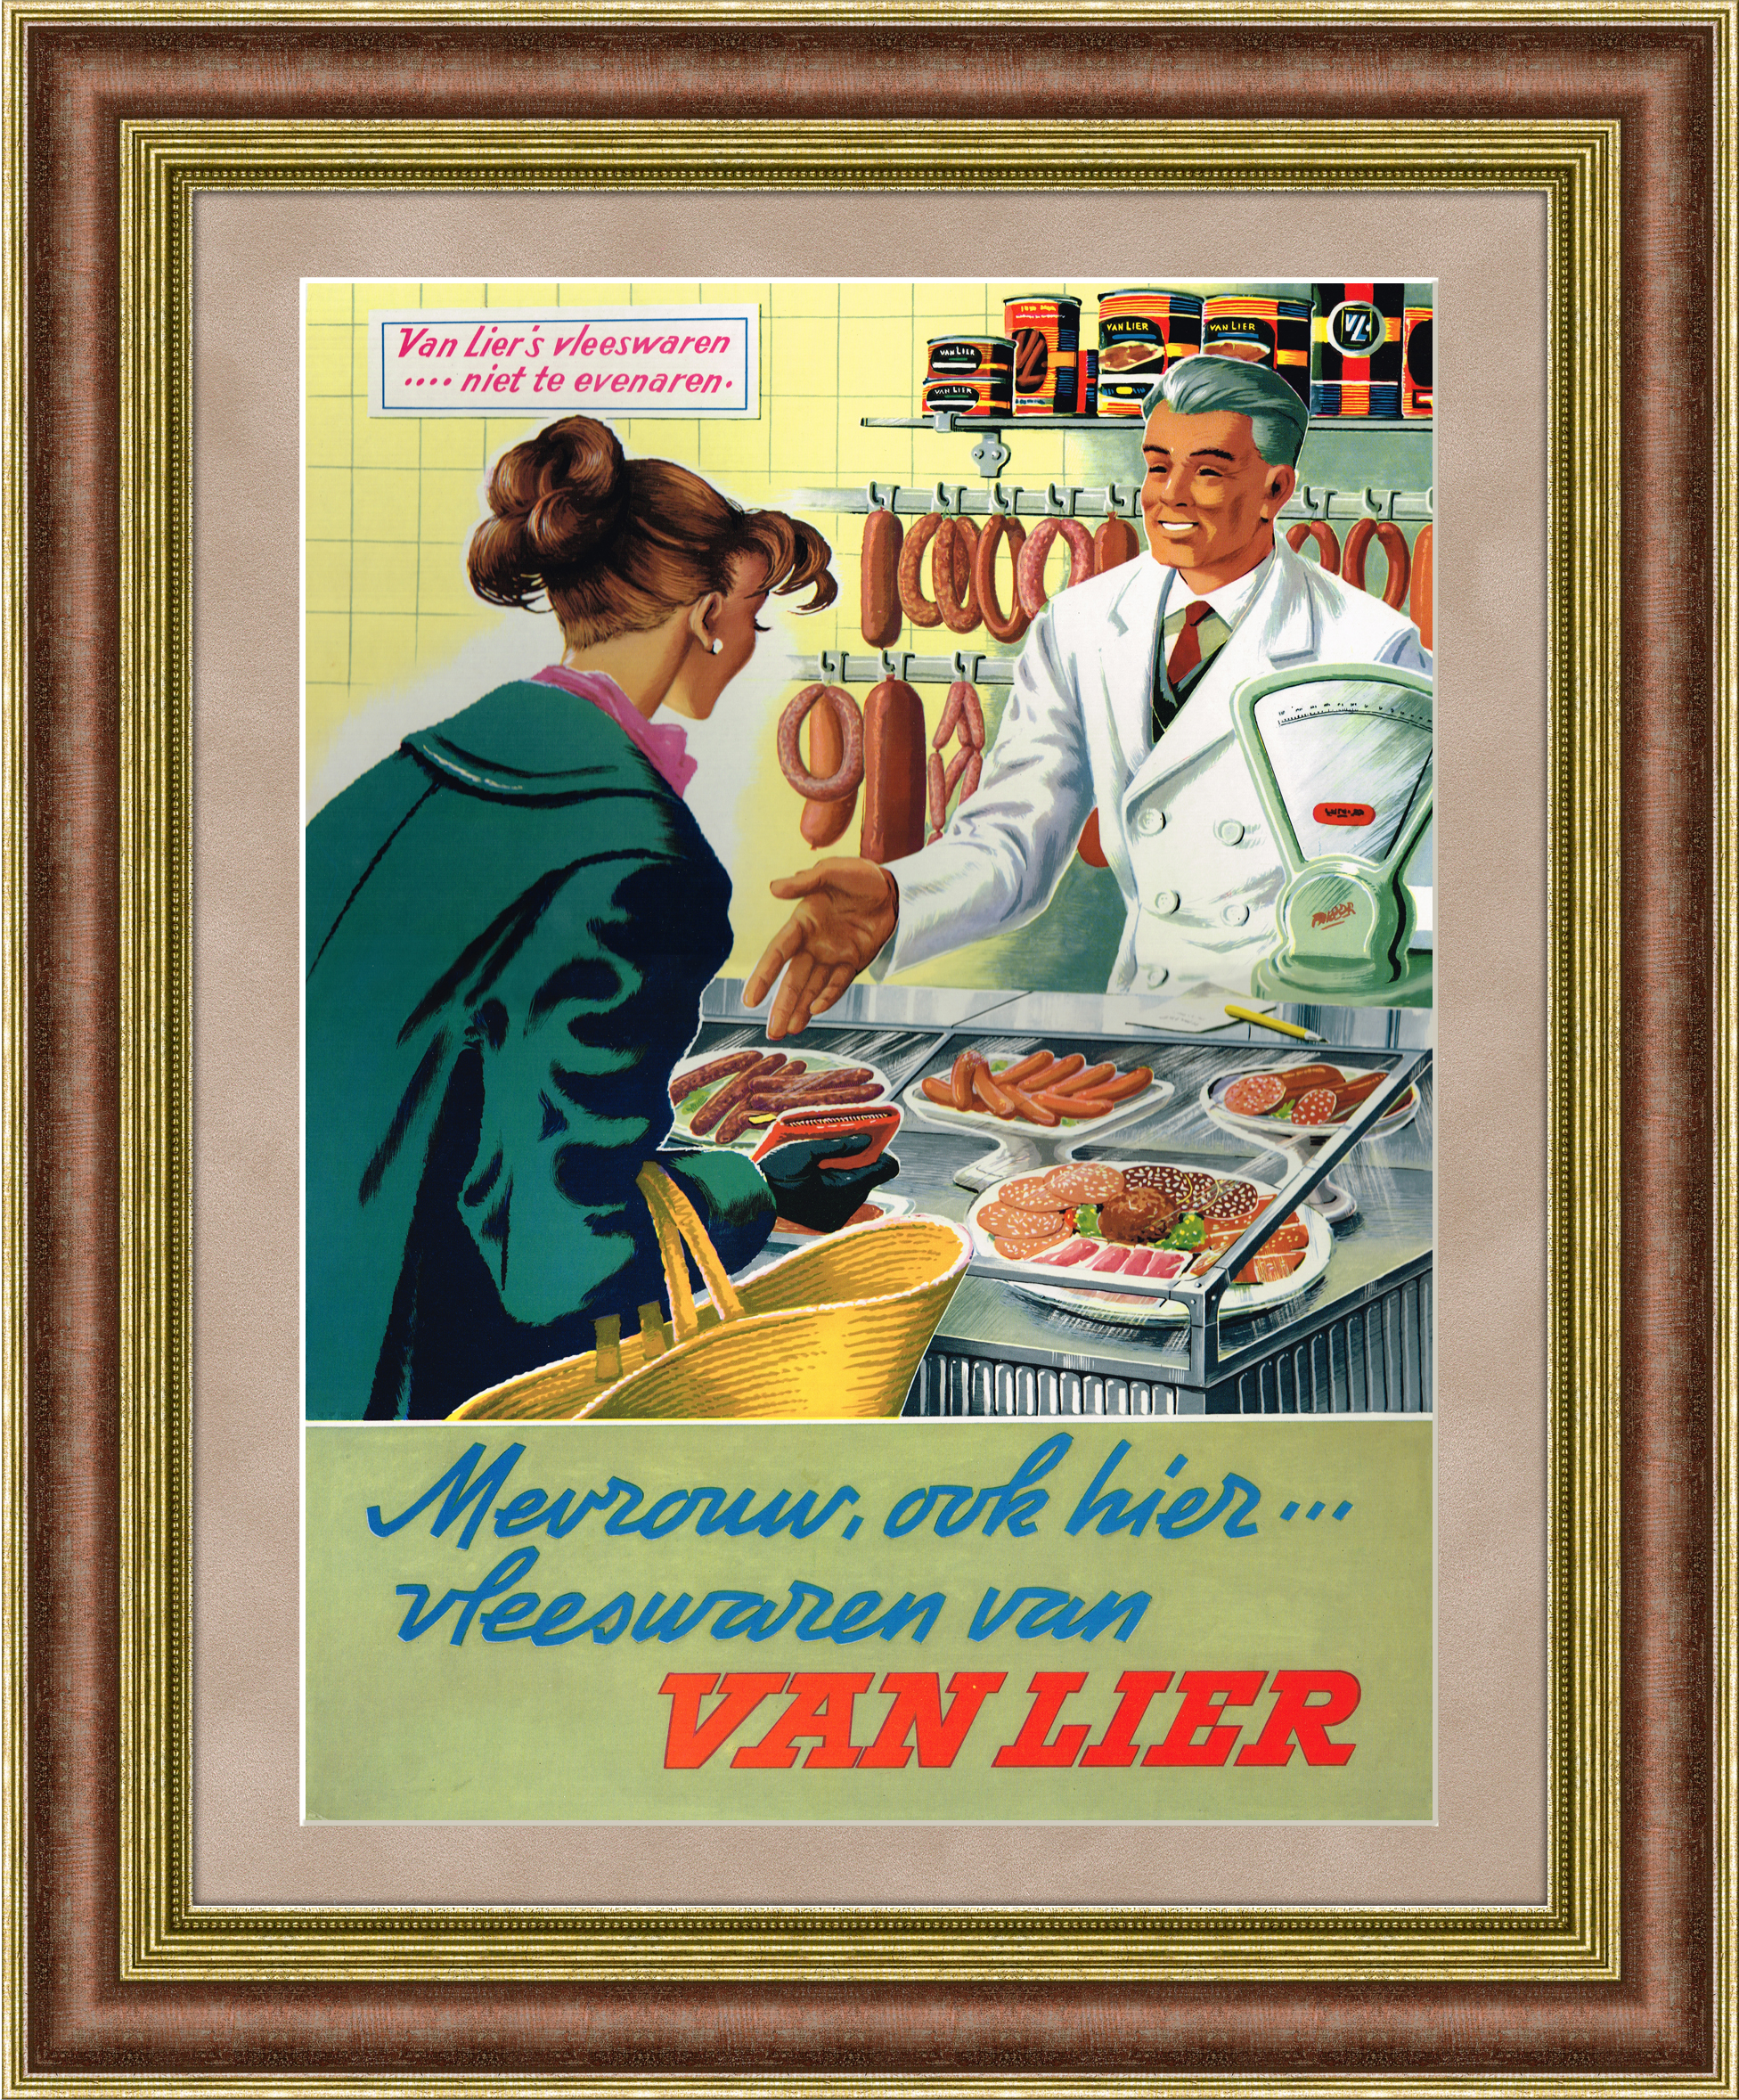 Советские плакаты общепита